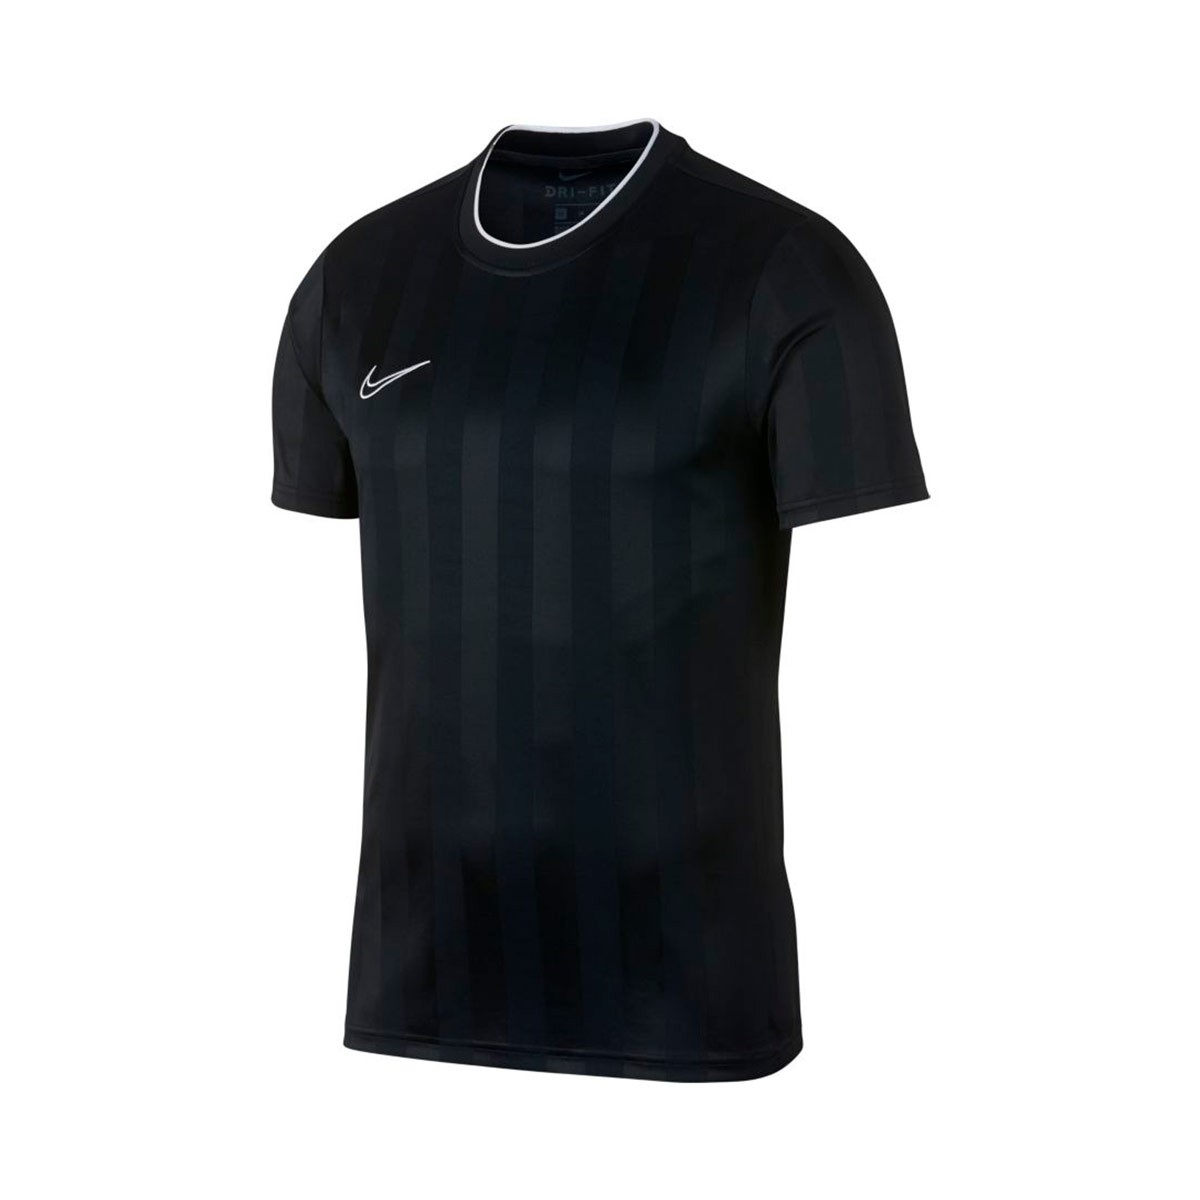 Jersey Nike Breathe Academy Black-White - Football store Fútbol Emotion